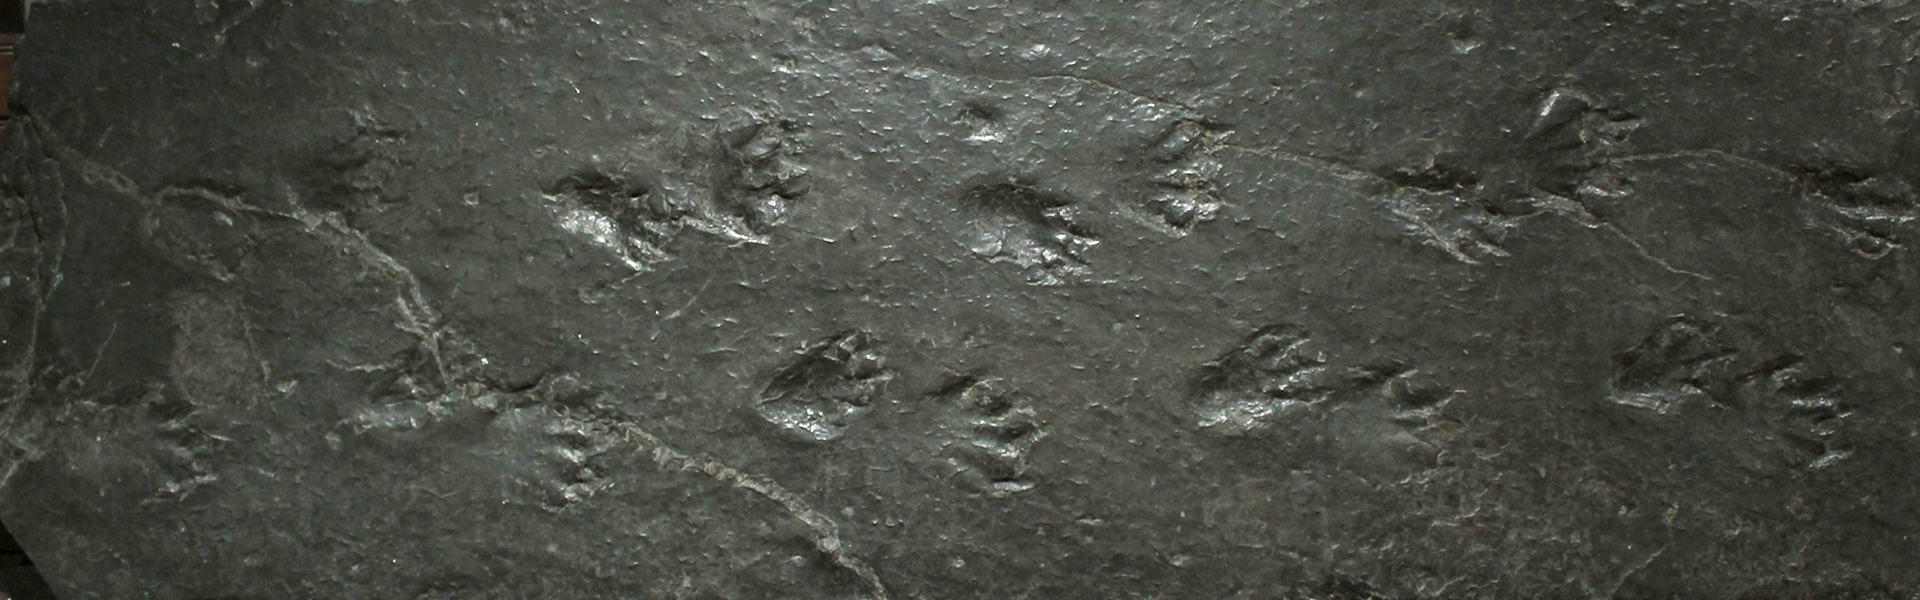 salamander footprints